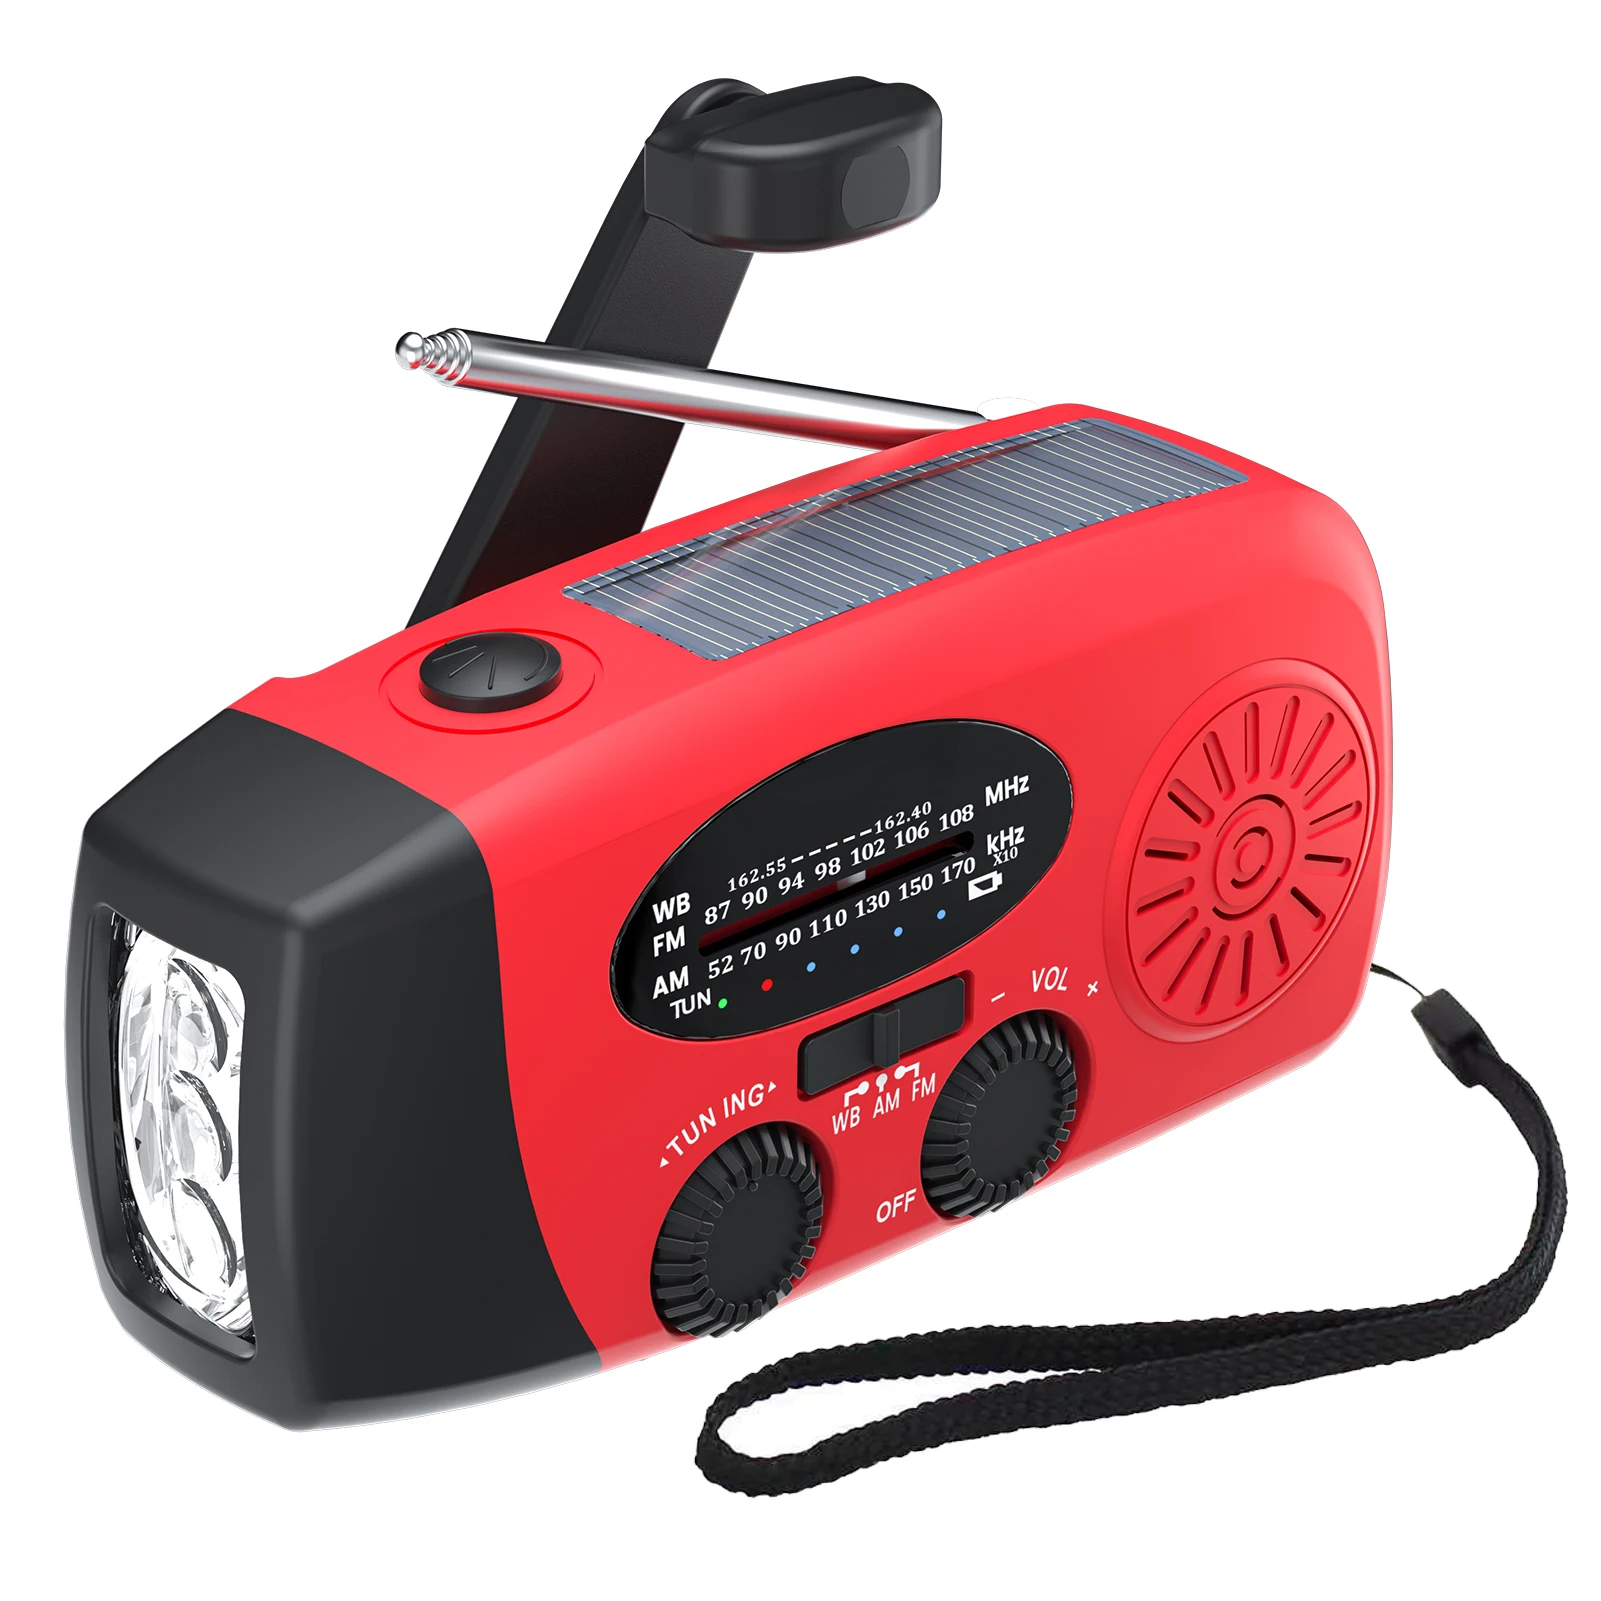 

portable mini hand crank radio with 2000 mAh power bank SOS Flashlight Survive waterproof emergency kit, Customized